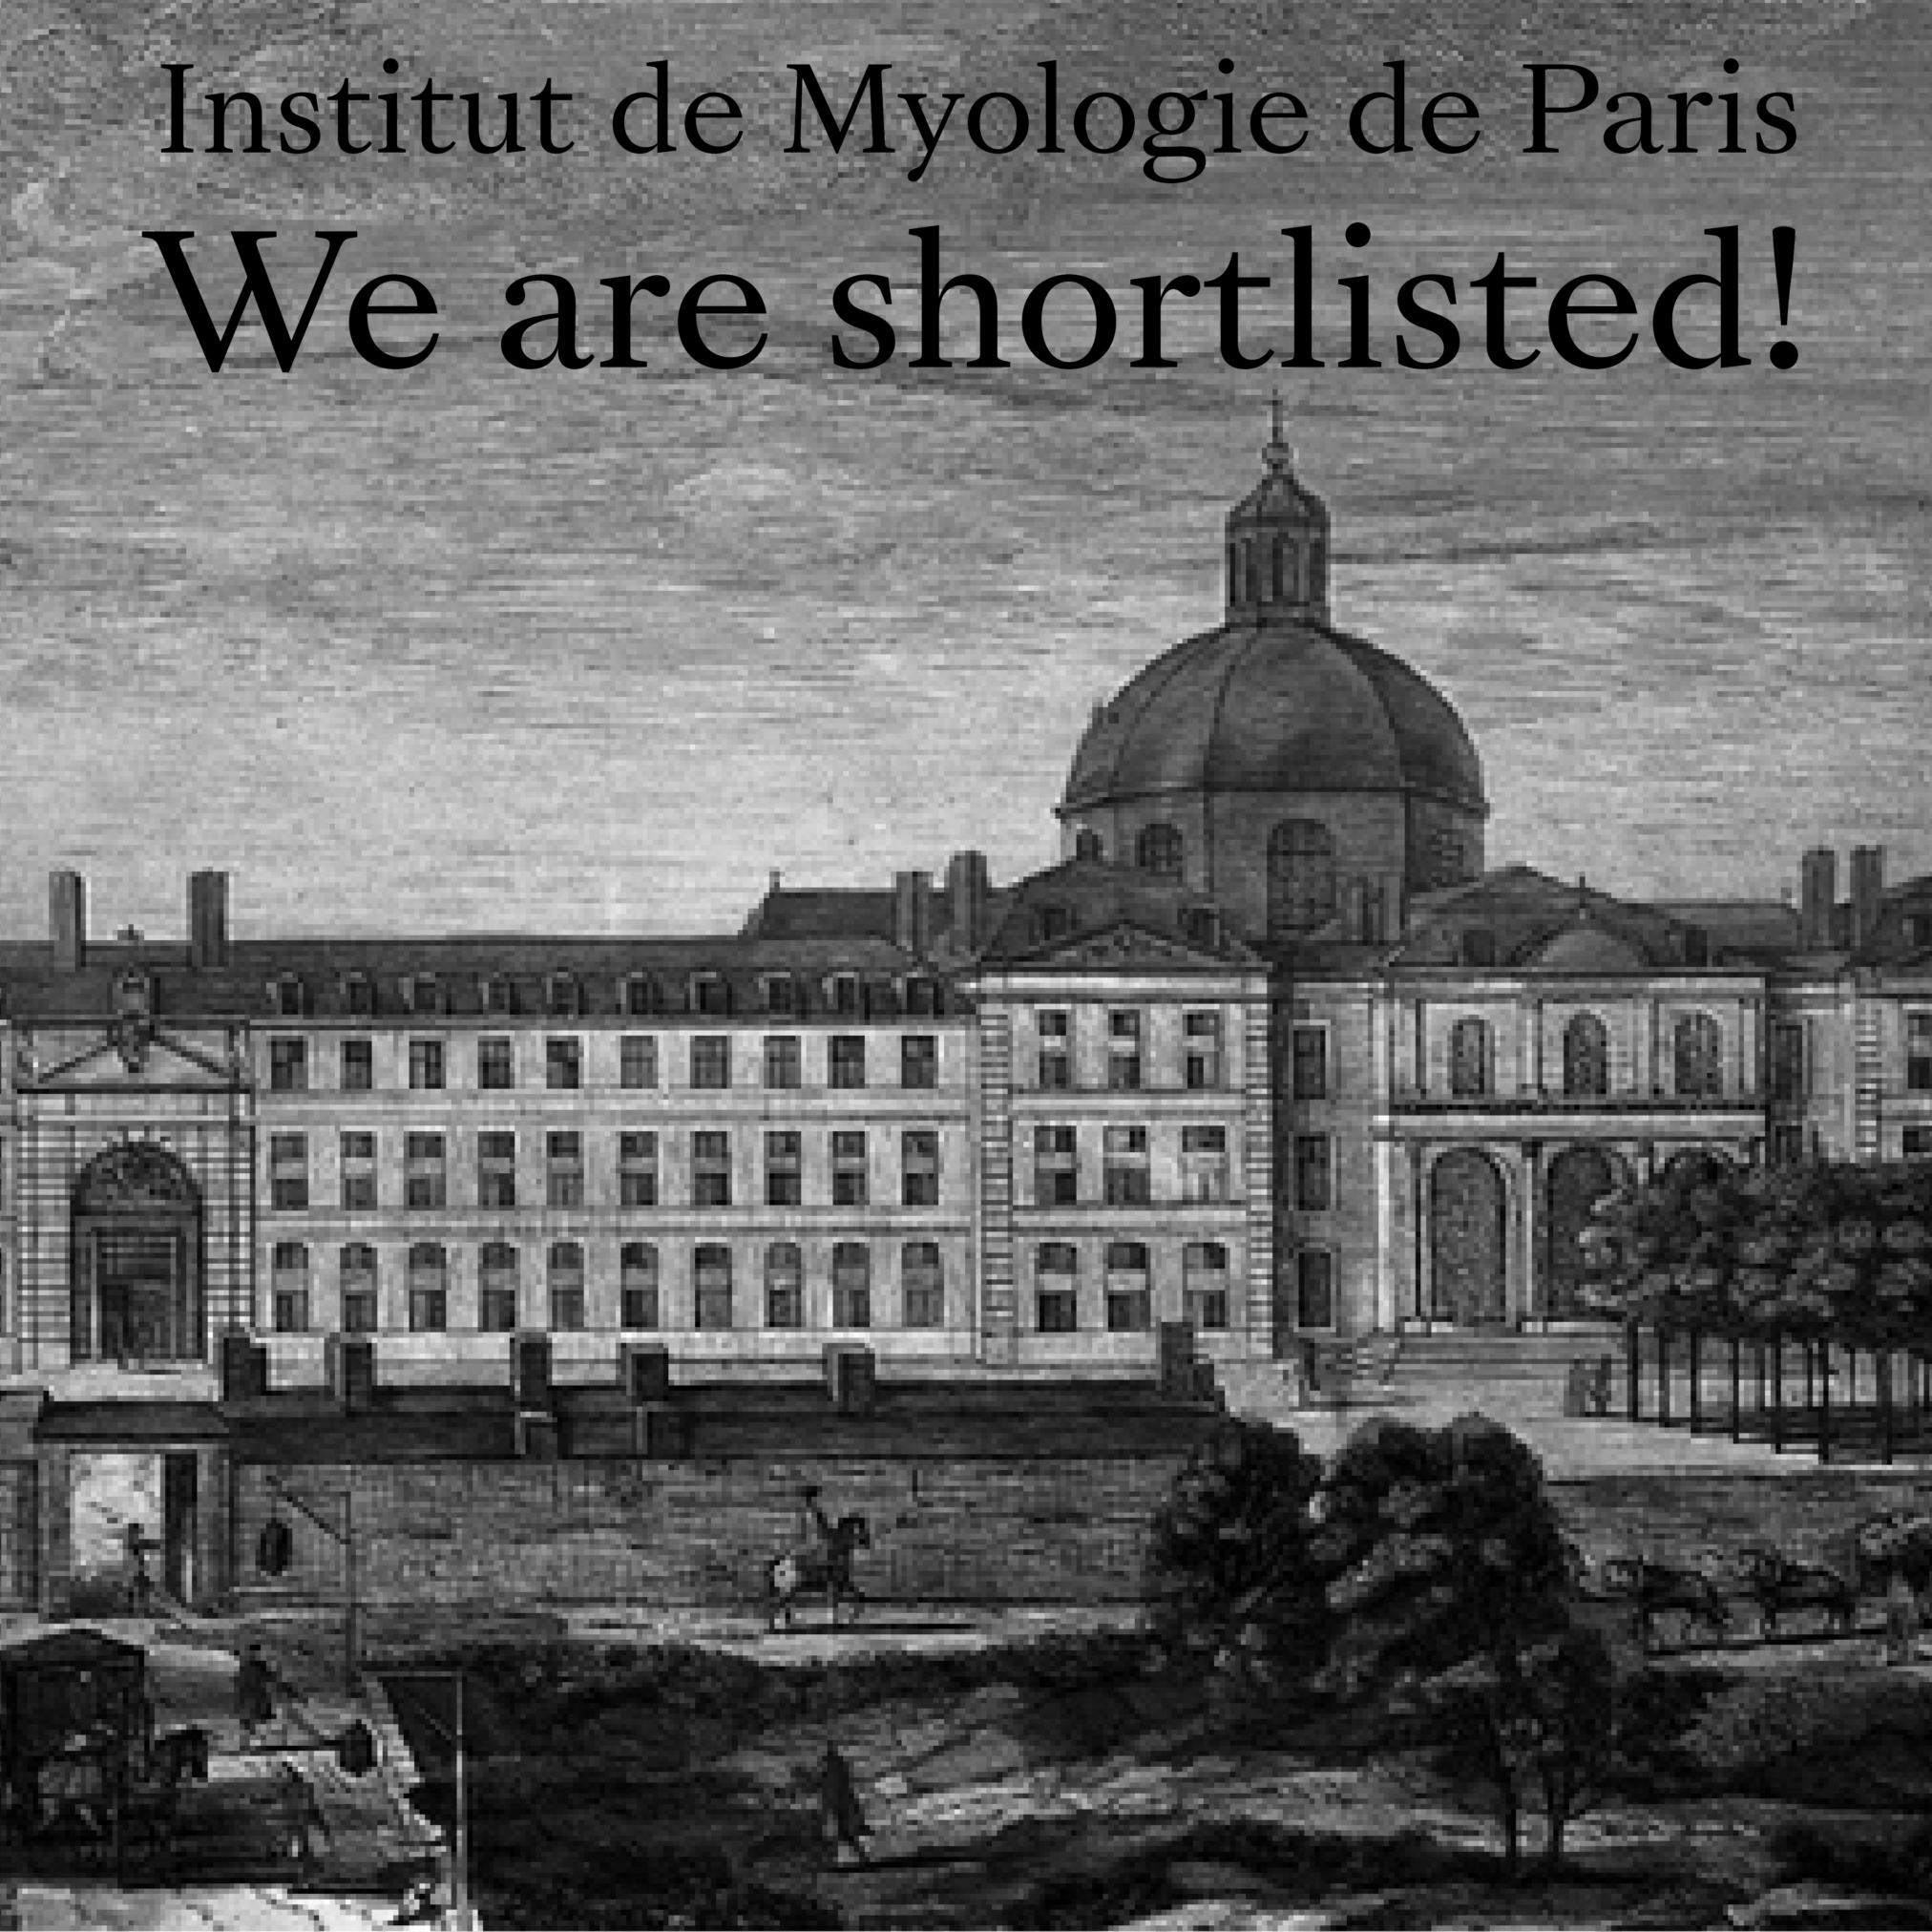 Historical image of Paris Myology